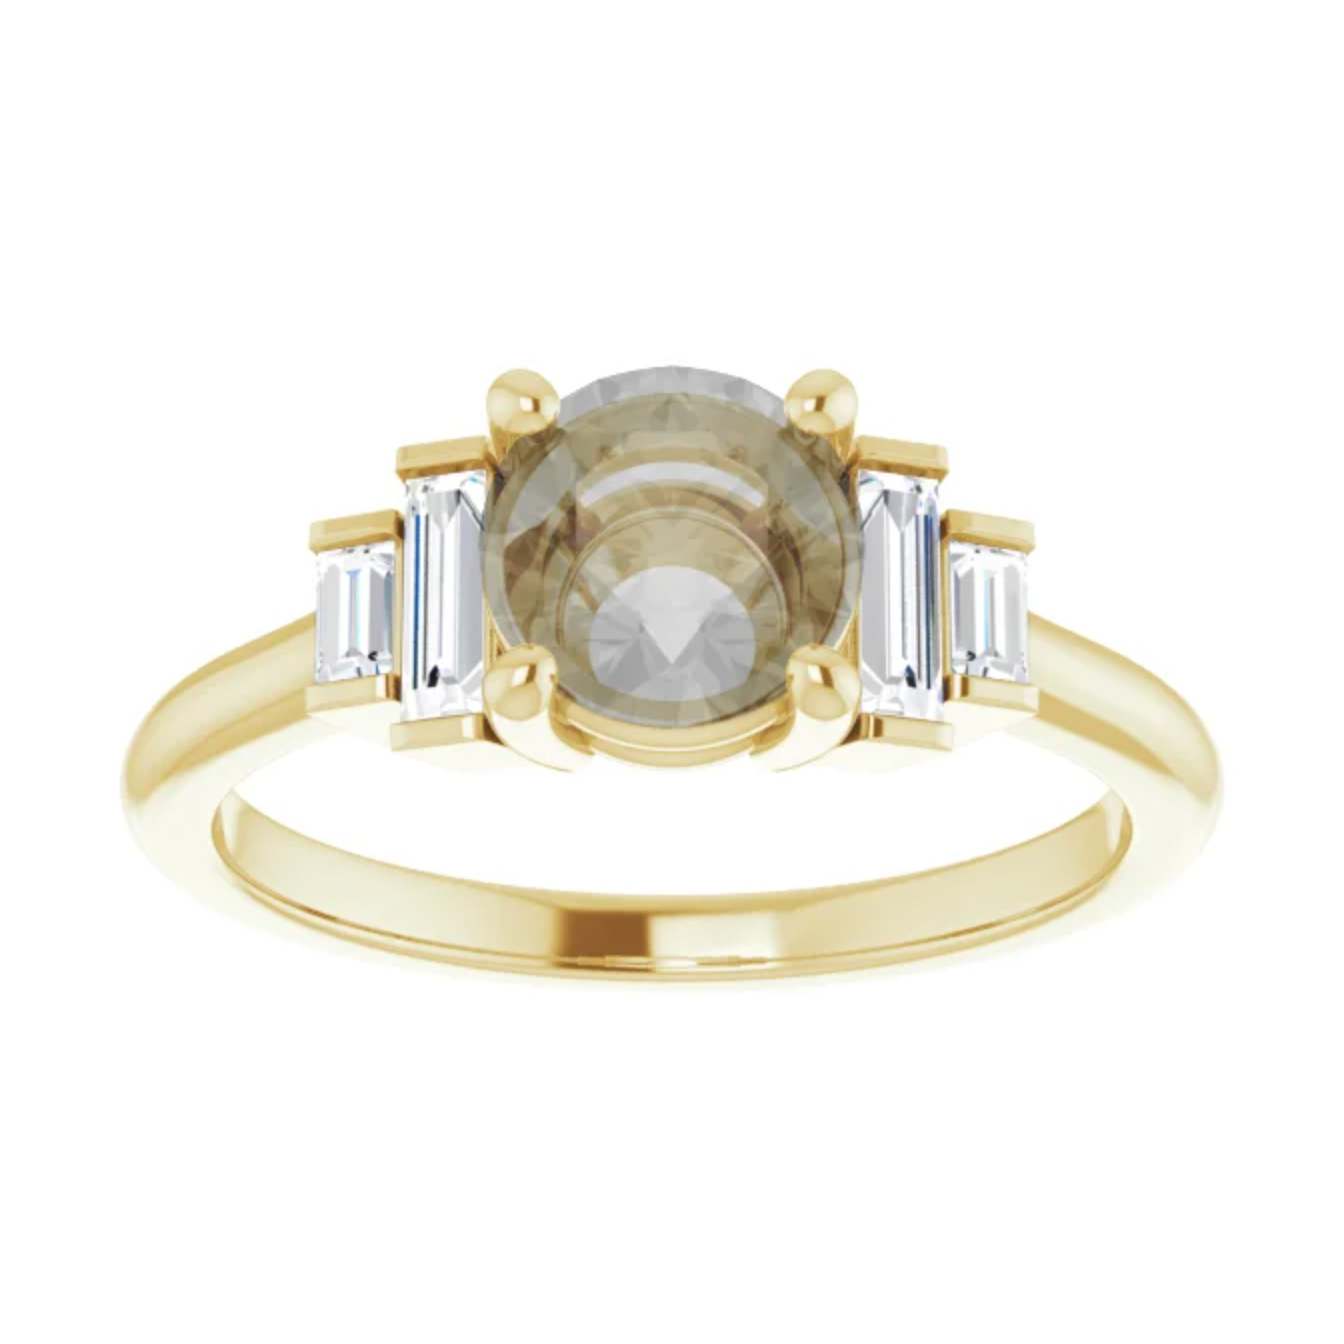 CAELEN (M) Zan Setting - Midwinter Co. Alternative Bridal Rings and Modern Fine Jewelry